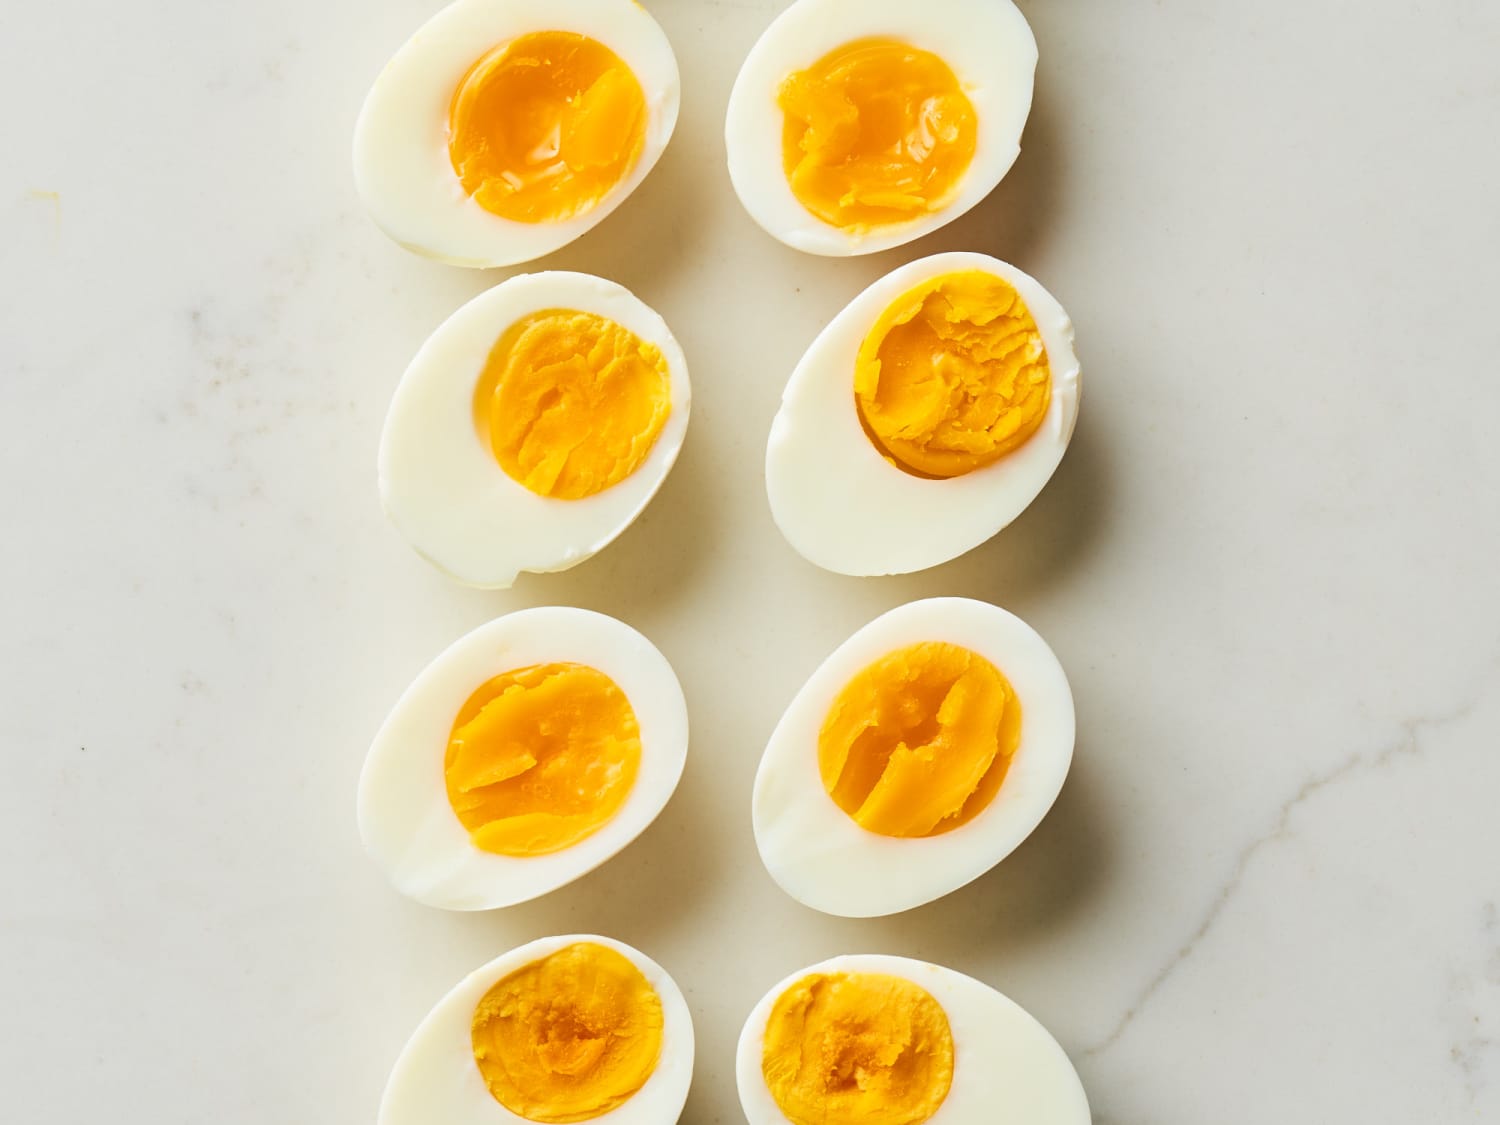 Best Golden Egg Recipe - How To Make Scrambled Hard Boiled Eggs